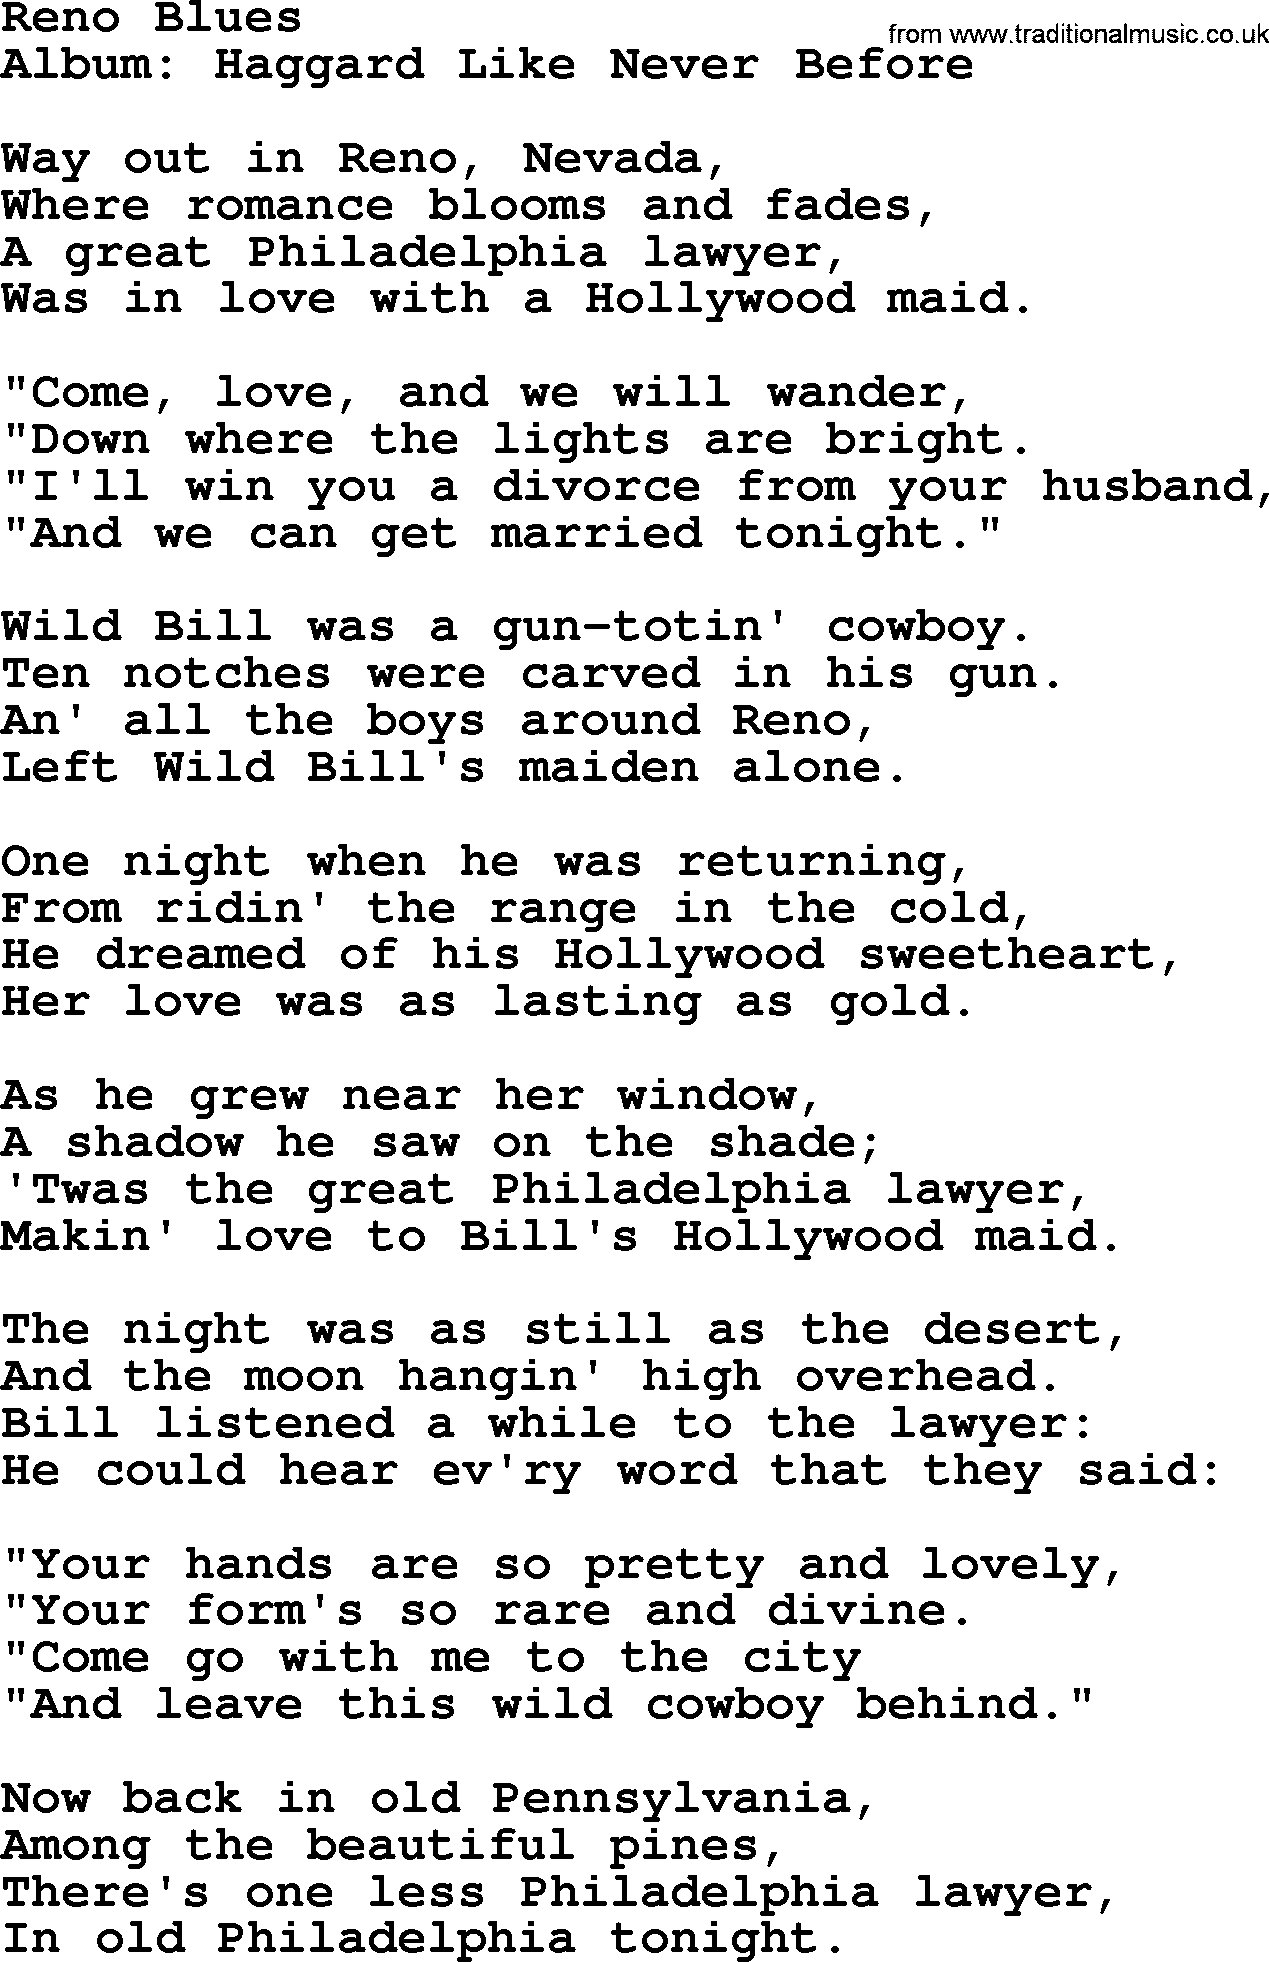 Merle Haggard song: Reno Blues, lyrics.